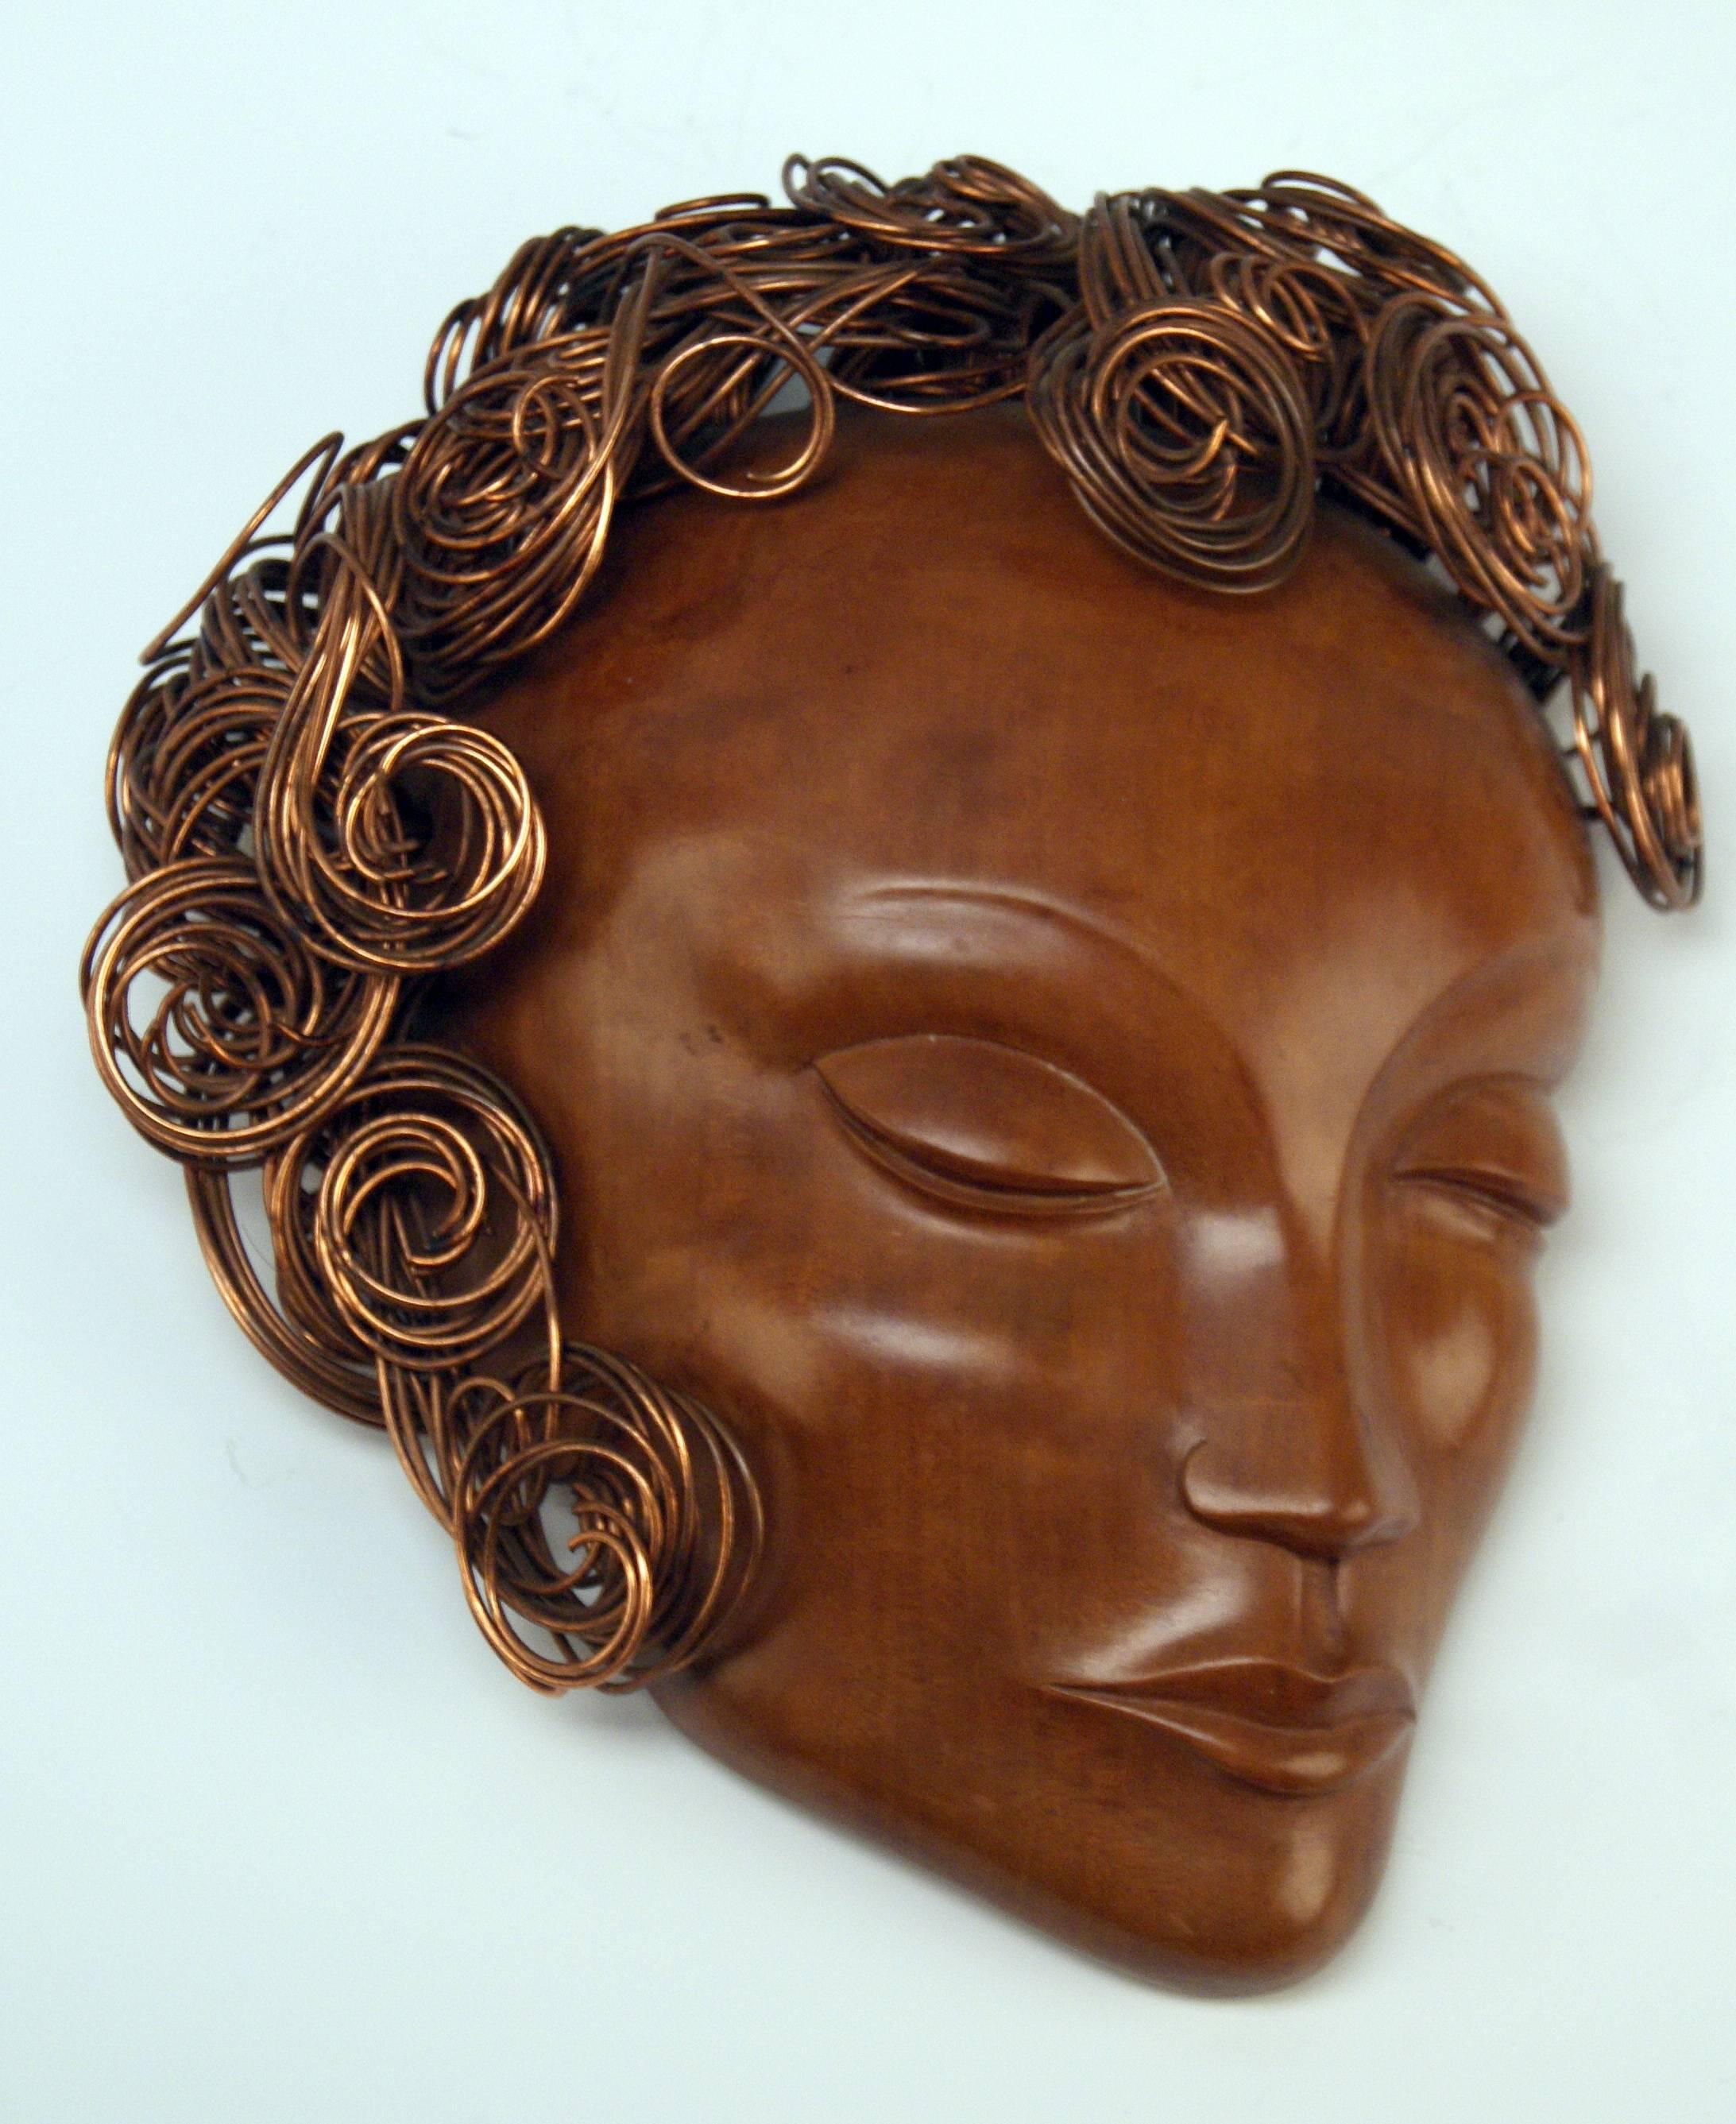 Austrian Art Deco Wooden Head Lady Curled Copper Hair by Hagenauer Vienna Made 1935-1940